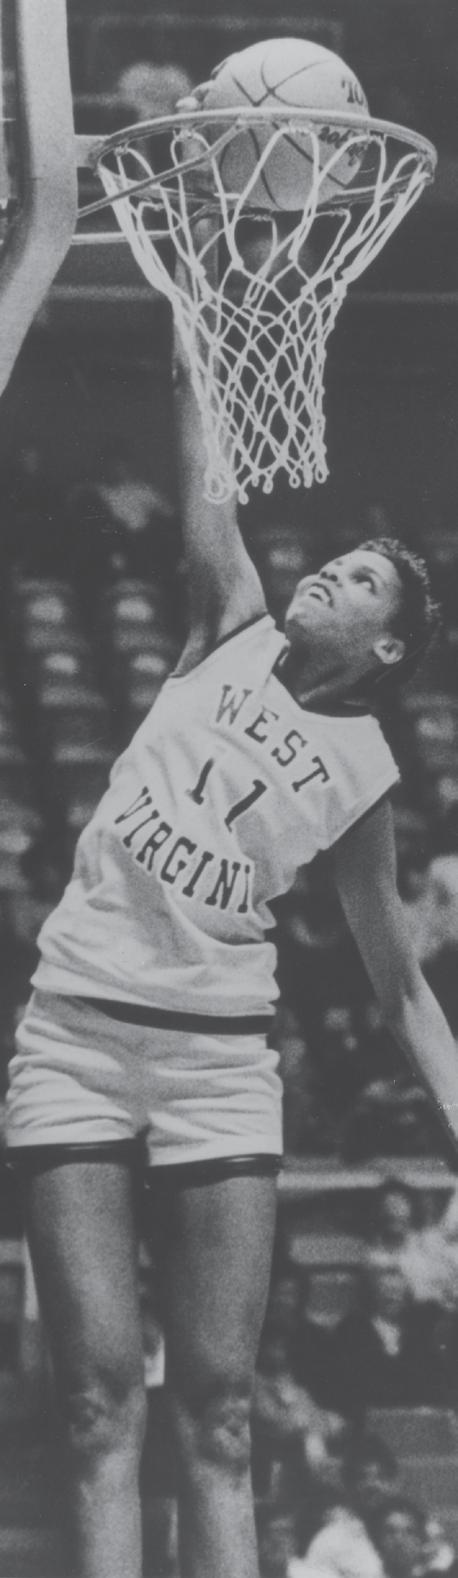 WVU Women s Basketball Firsts Coach: Kittie Blakemore became the first head coach of the WVU women s basketball program in 1973.